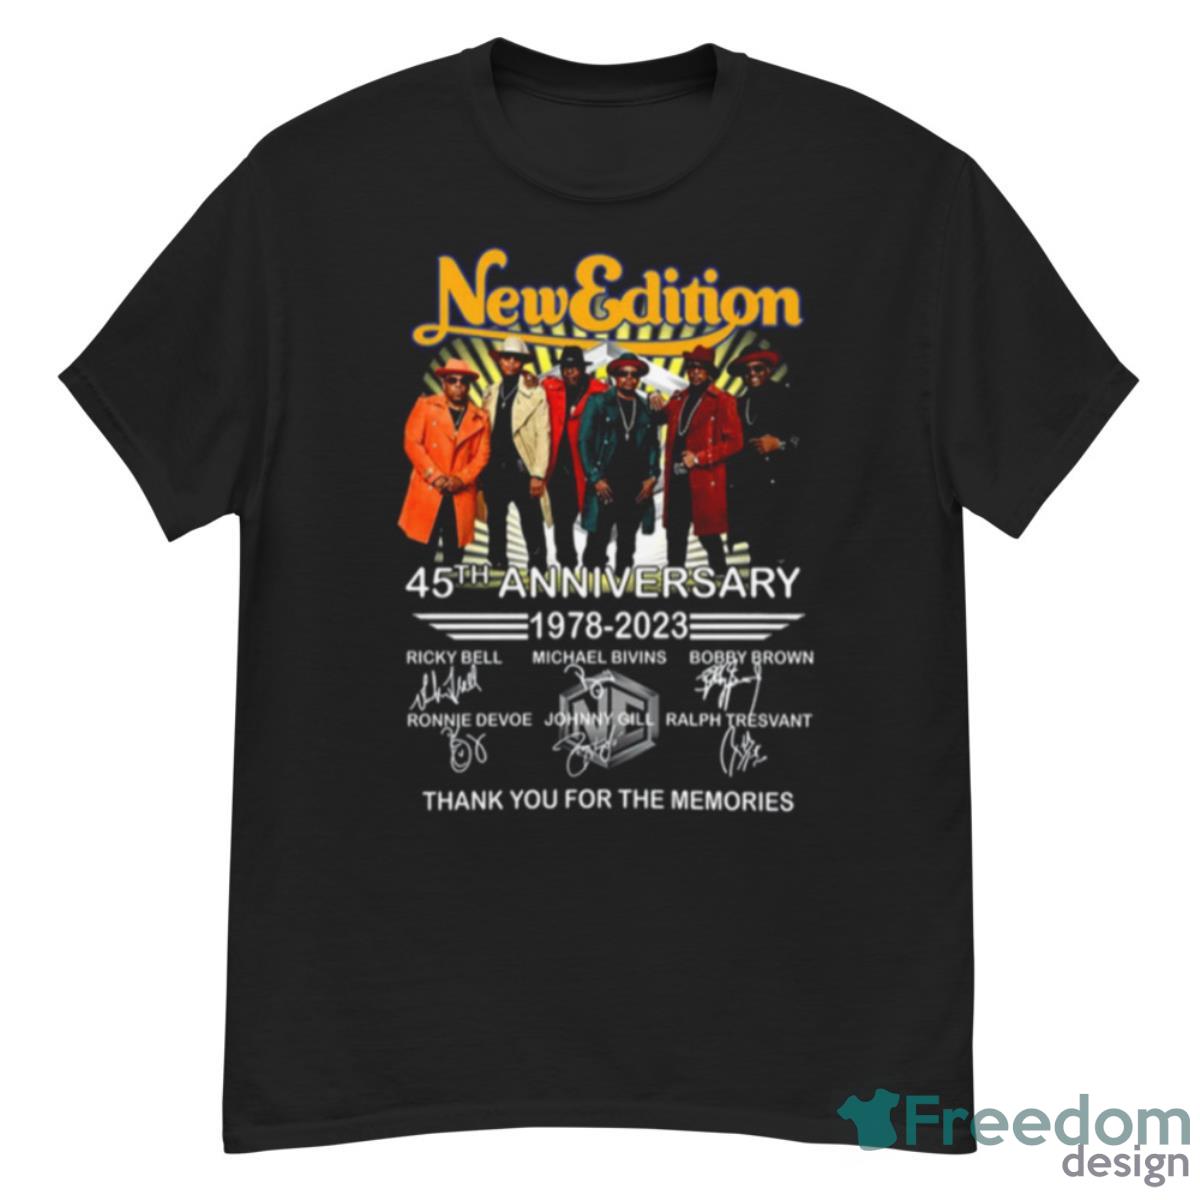 New Edition 45th Anniversary Shirt - G500 Men’s Classic T-Shirt